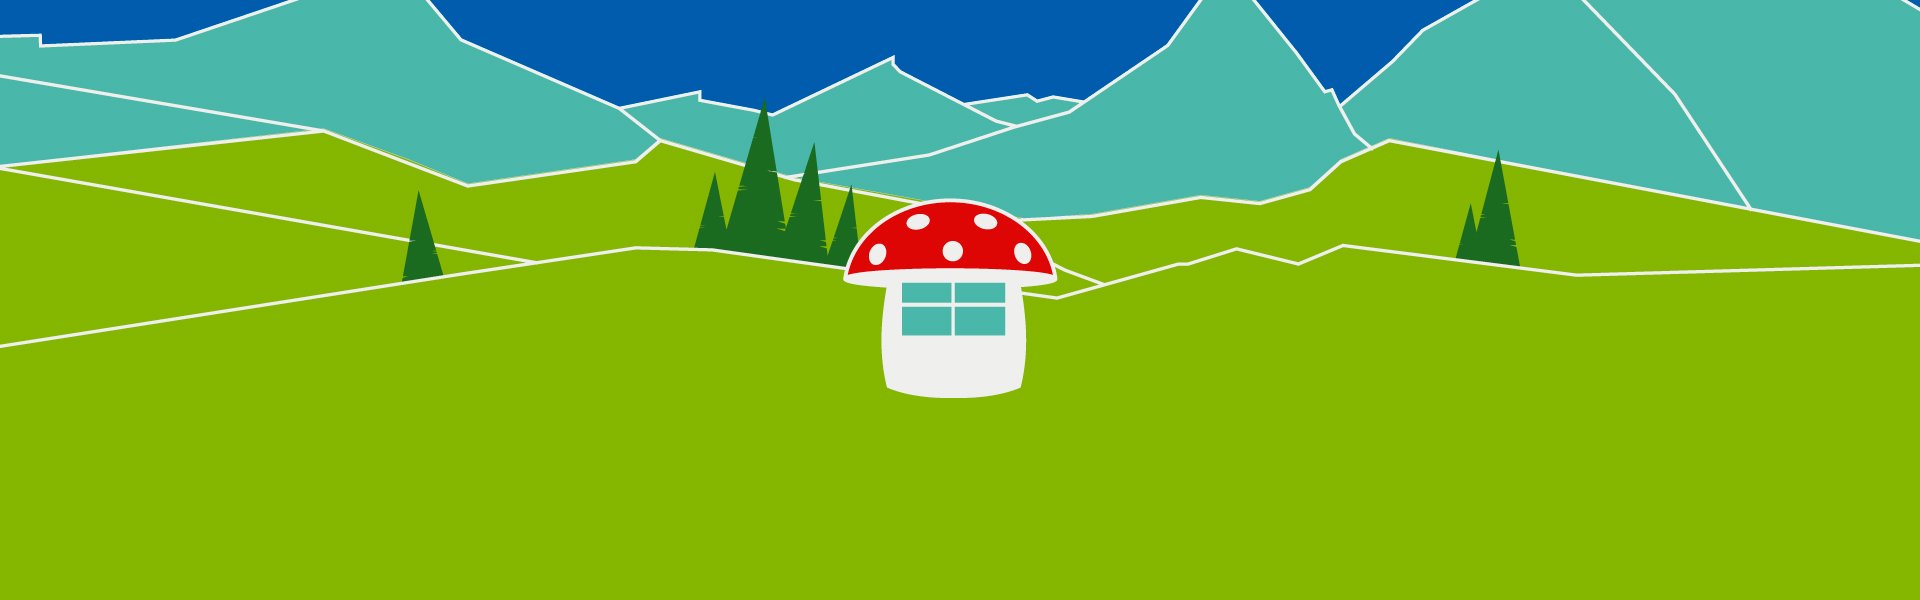 Milk mushroom illustration